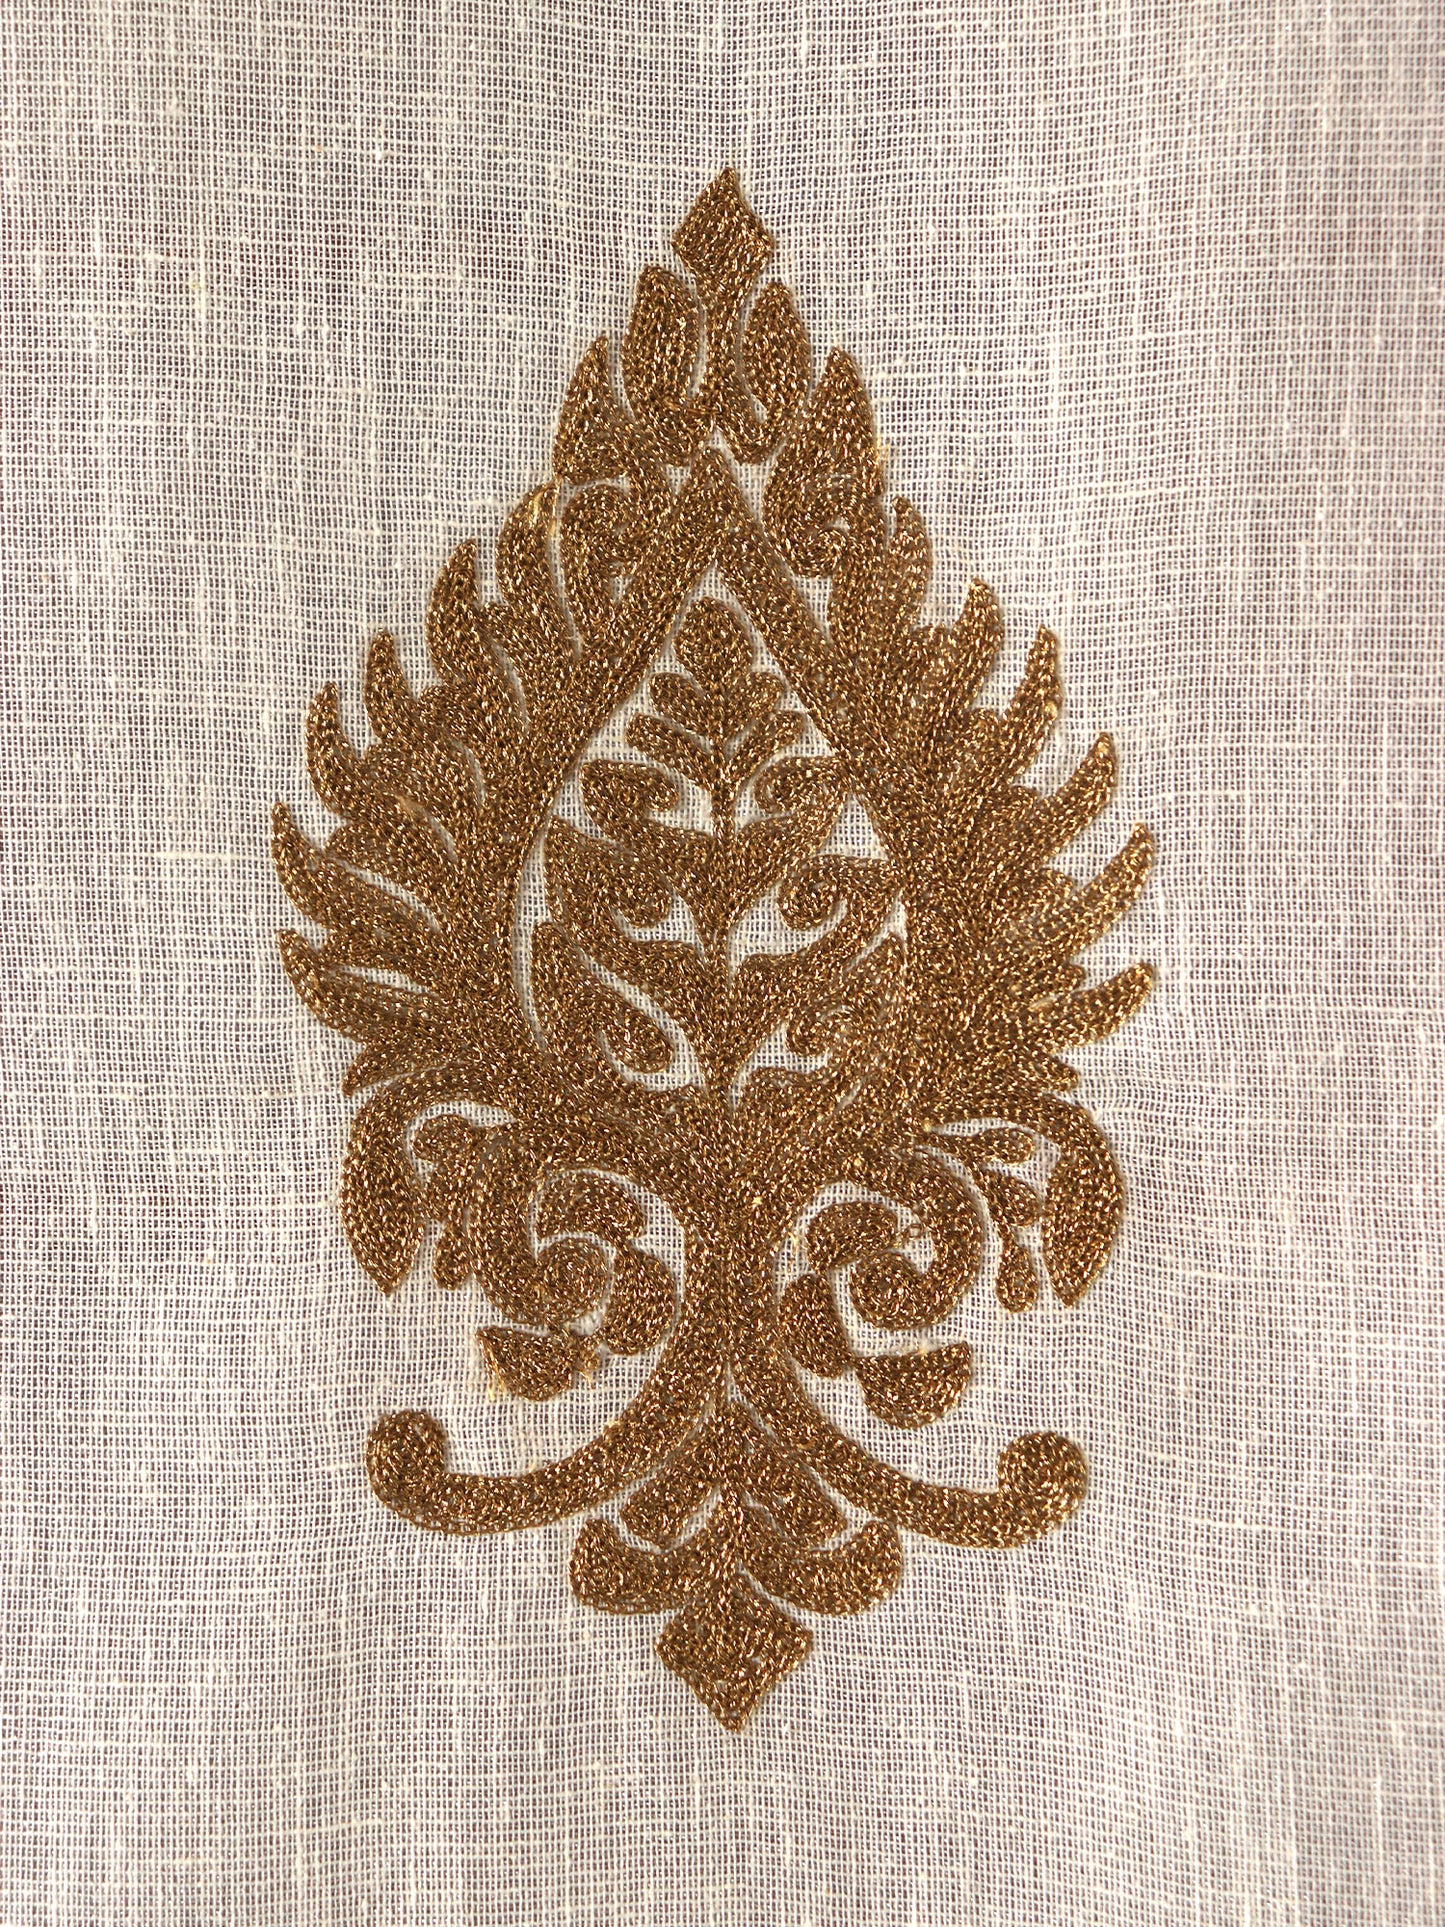 Door Semi Transparent Sheer Polyester with Golden Embroidered Motif Beige - 54" x 84"